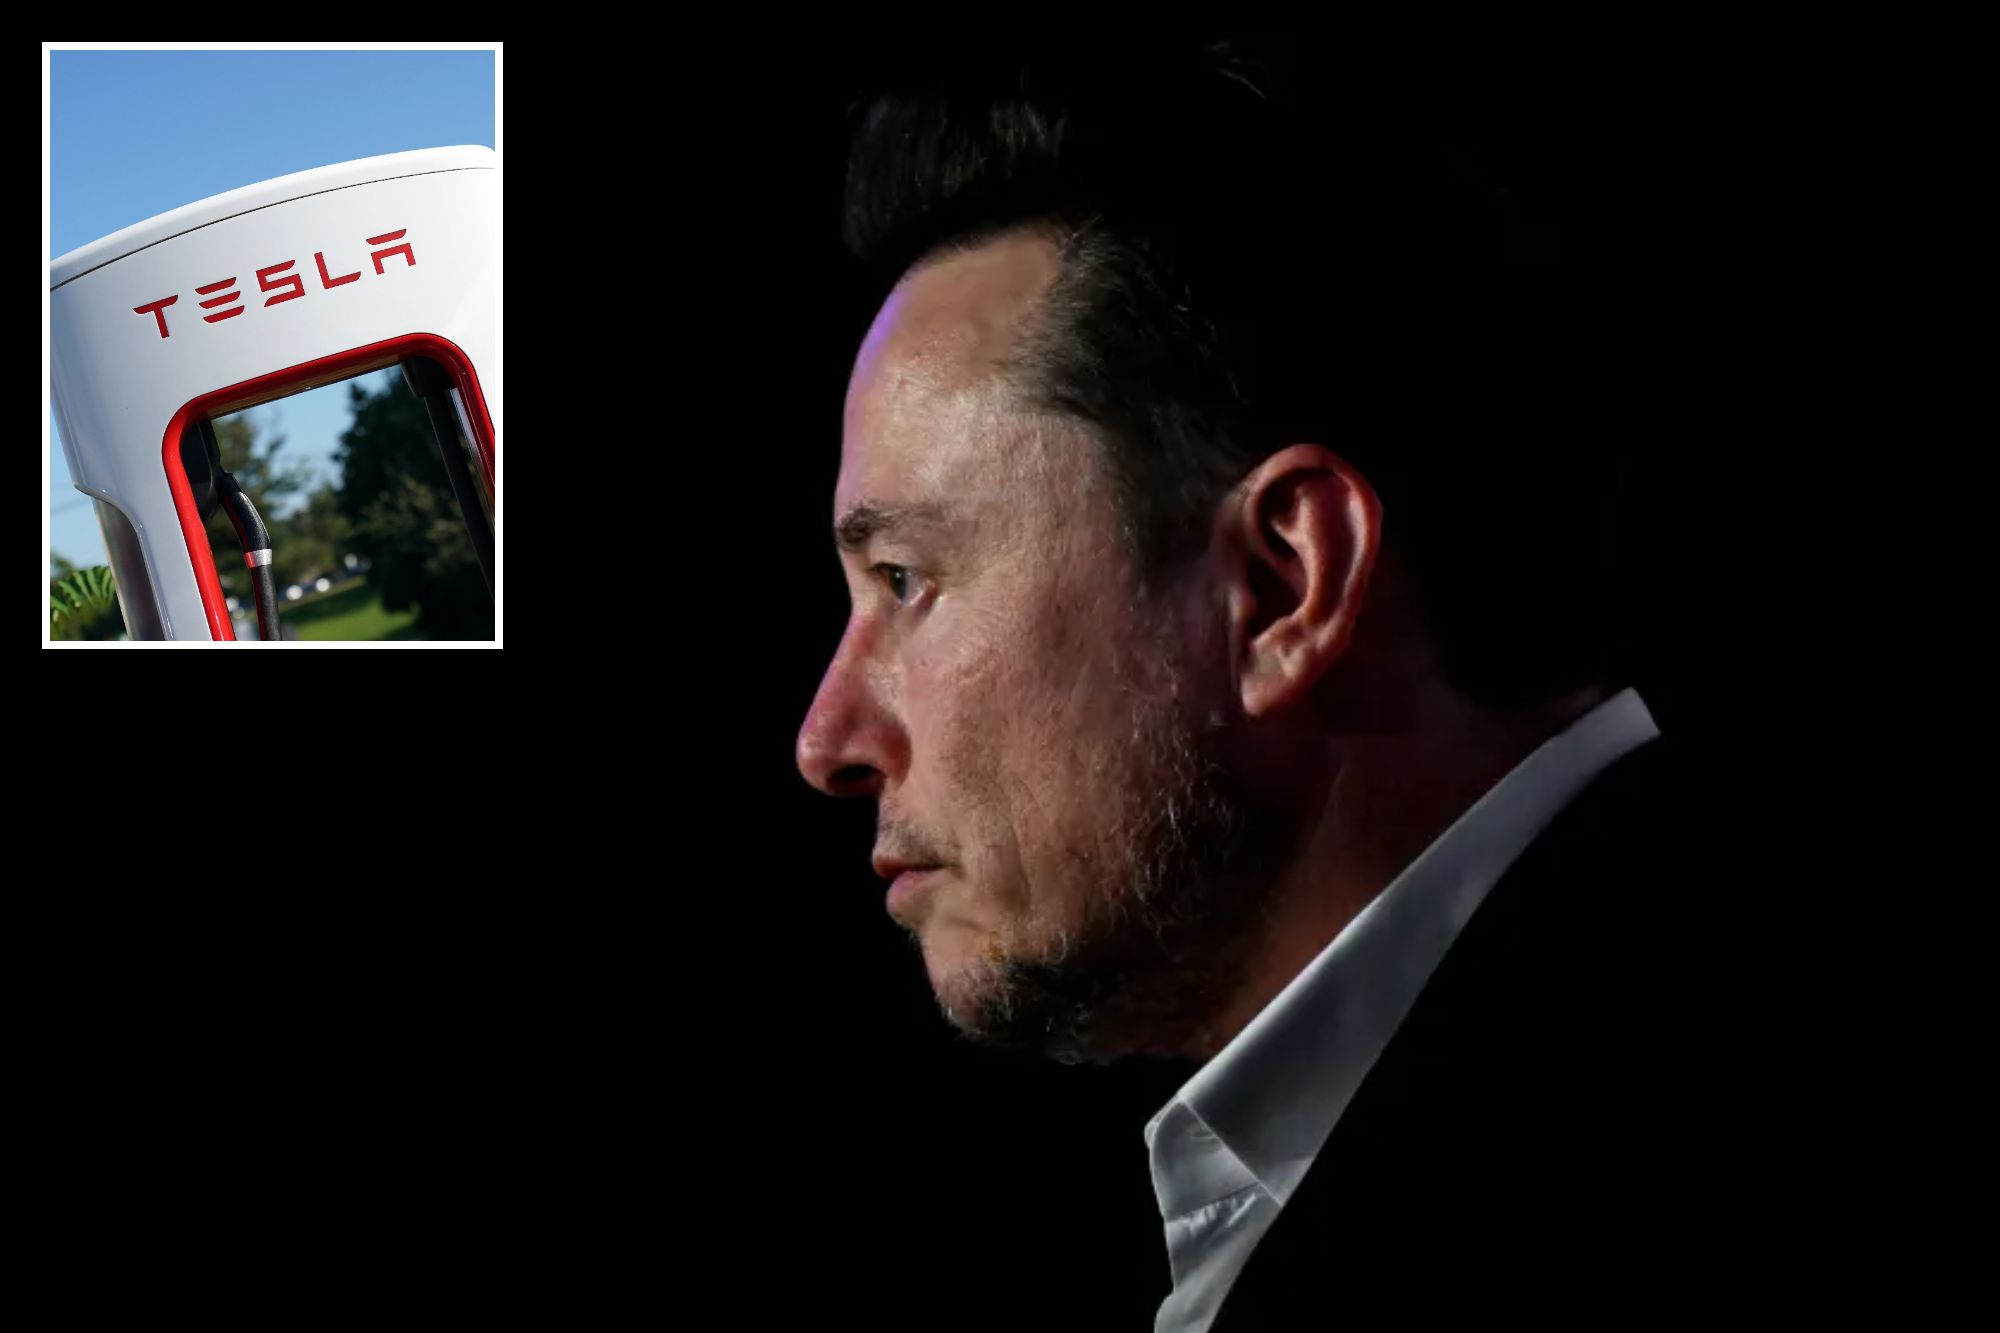 Tesla CEO Elon Musk and Tesla charger